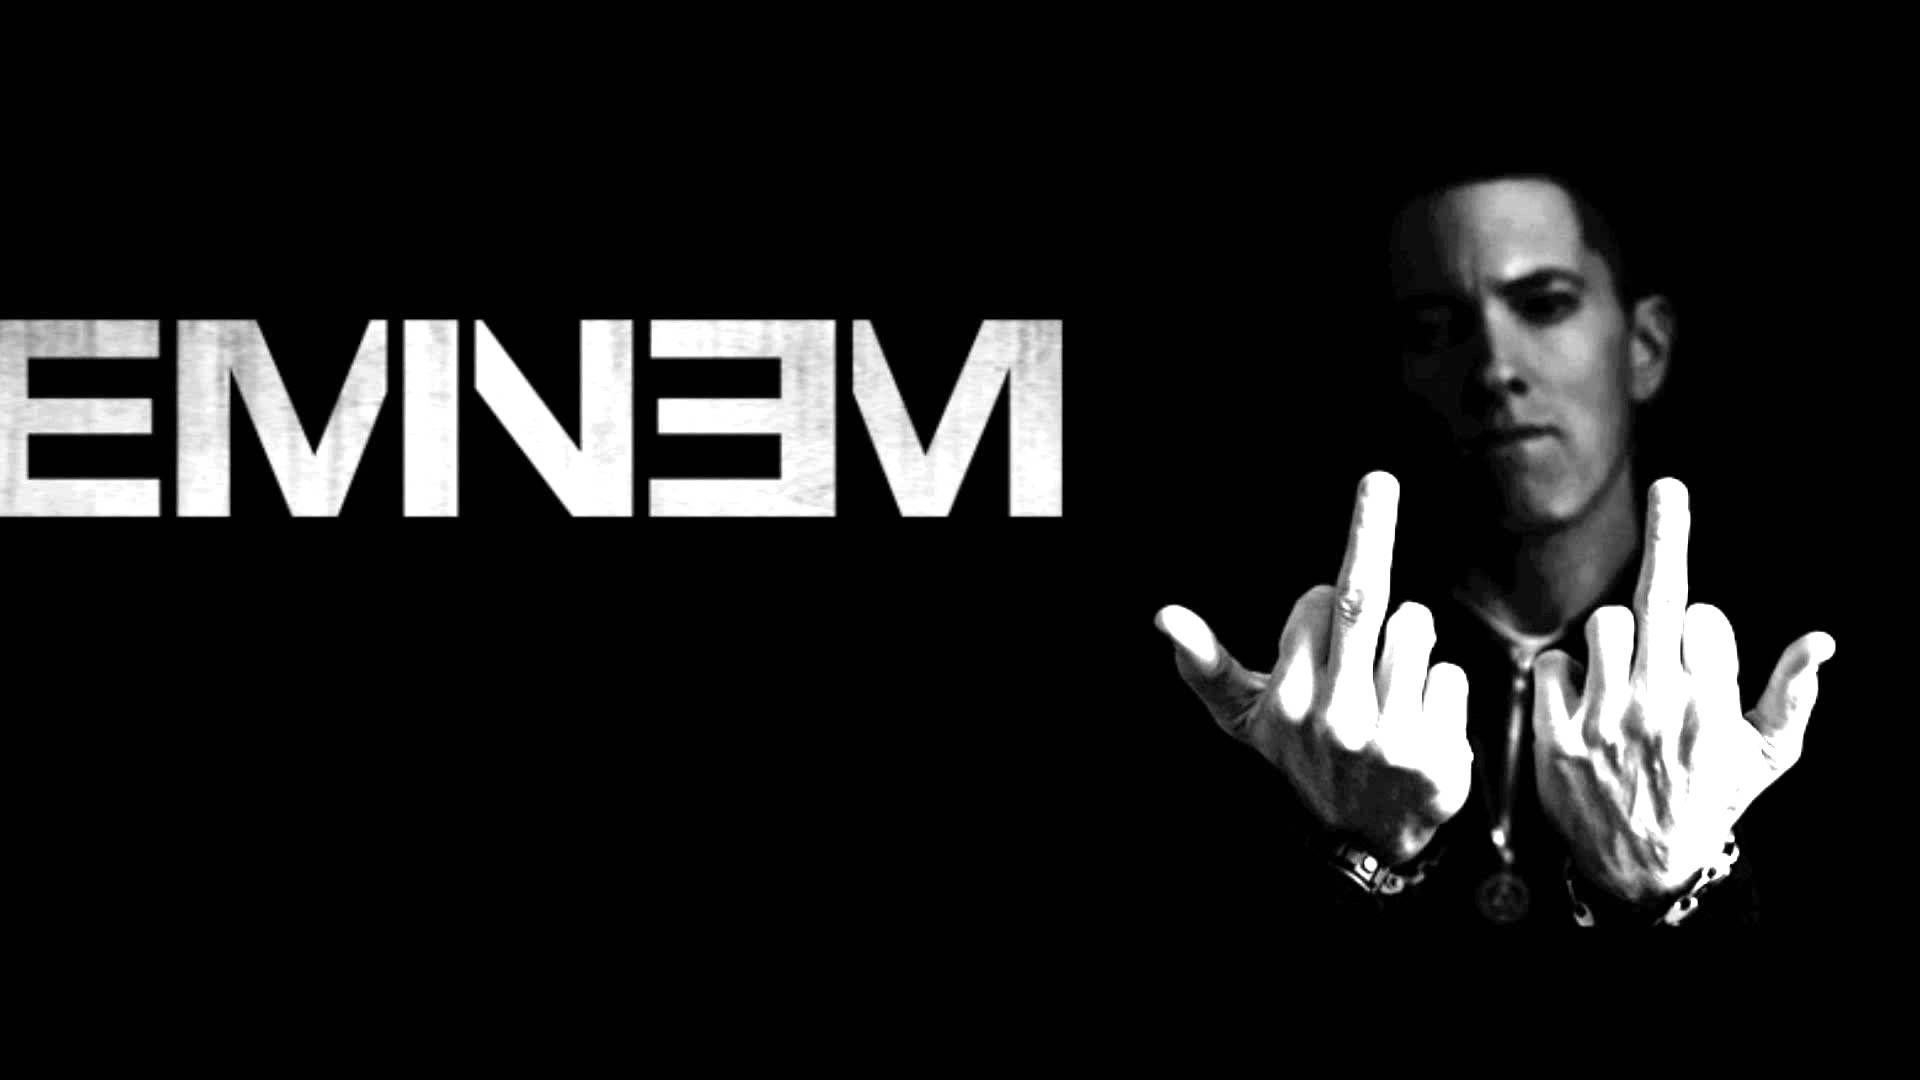 Not Afraid  Eminem Testo lyrics traduzione e video